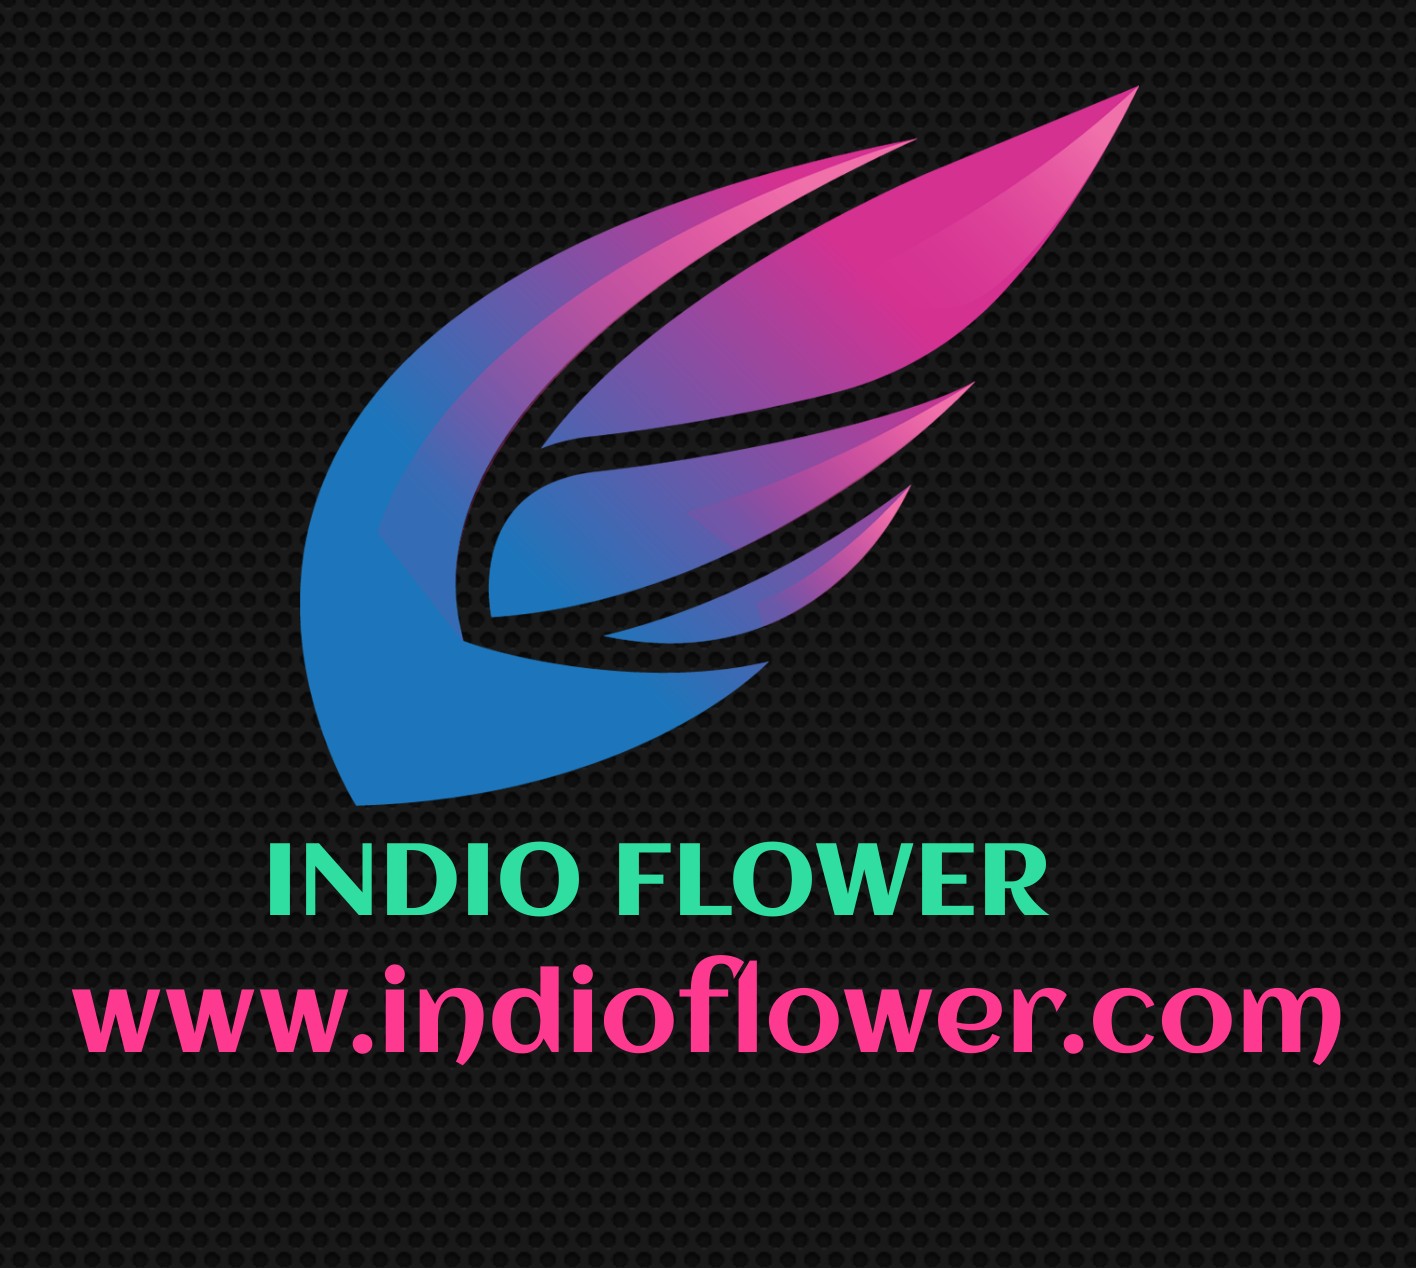 Indio flower logo